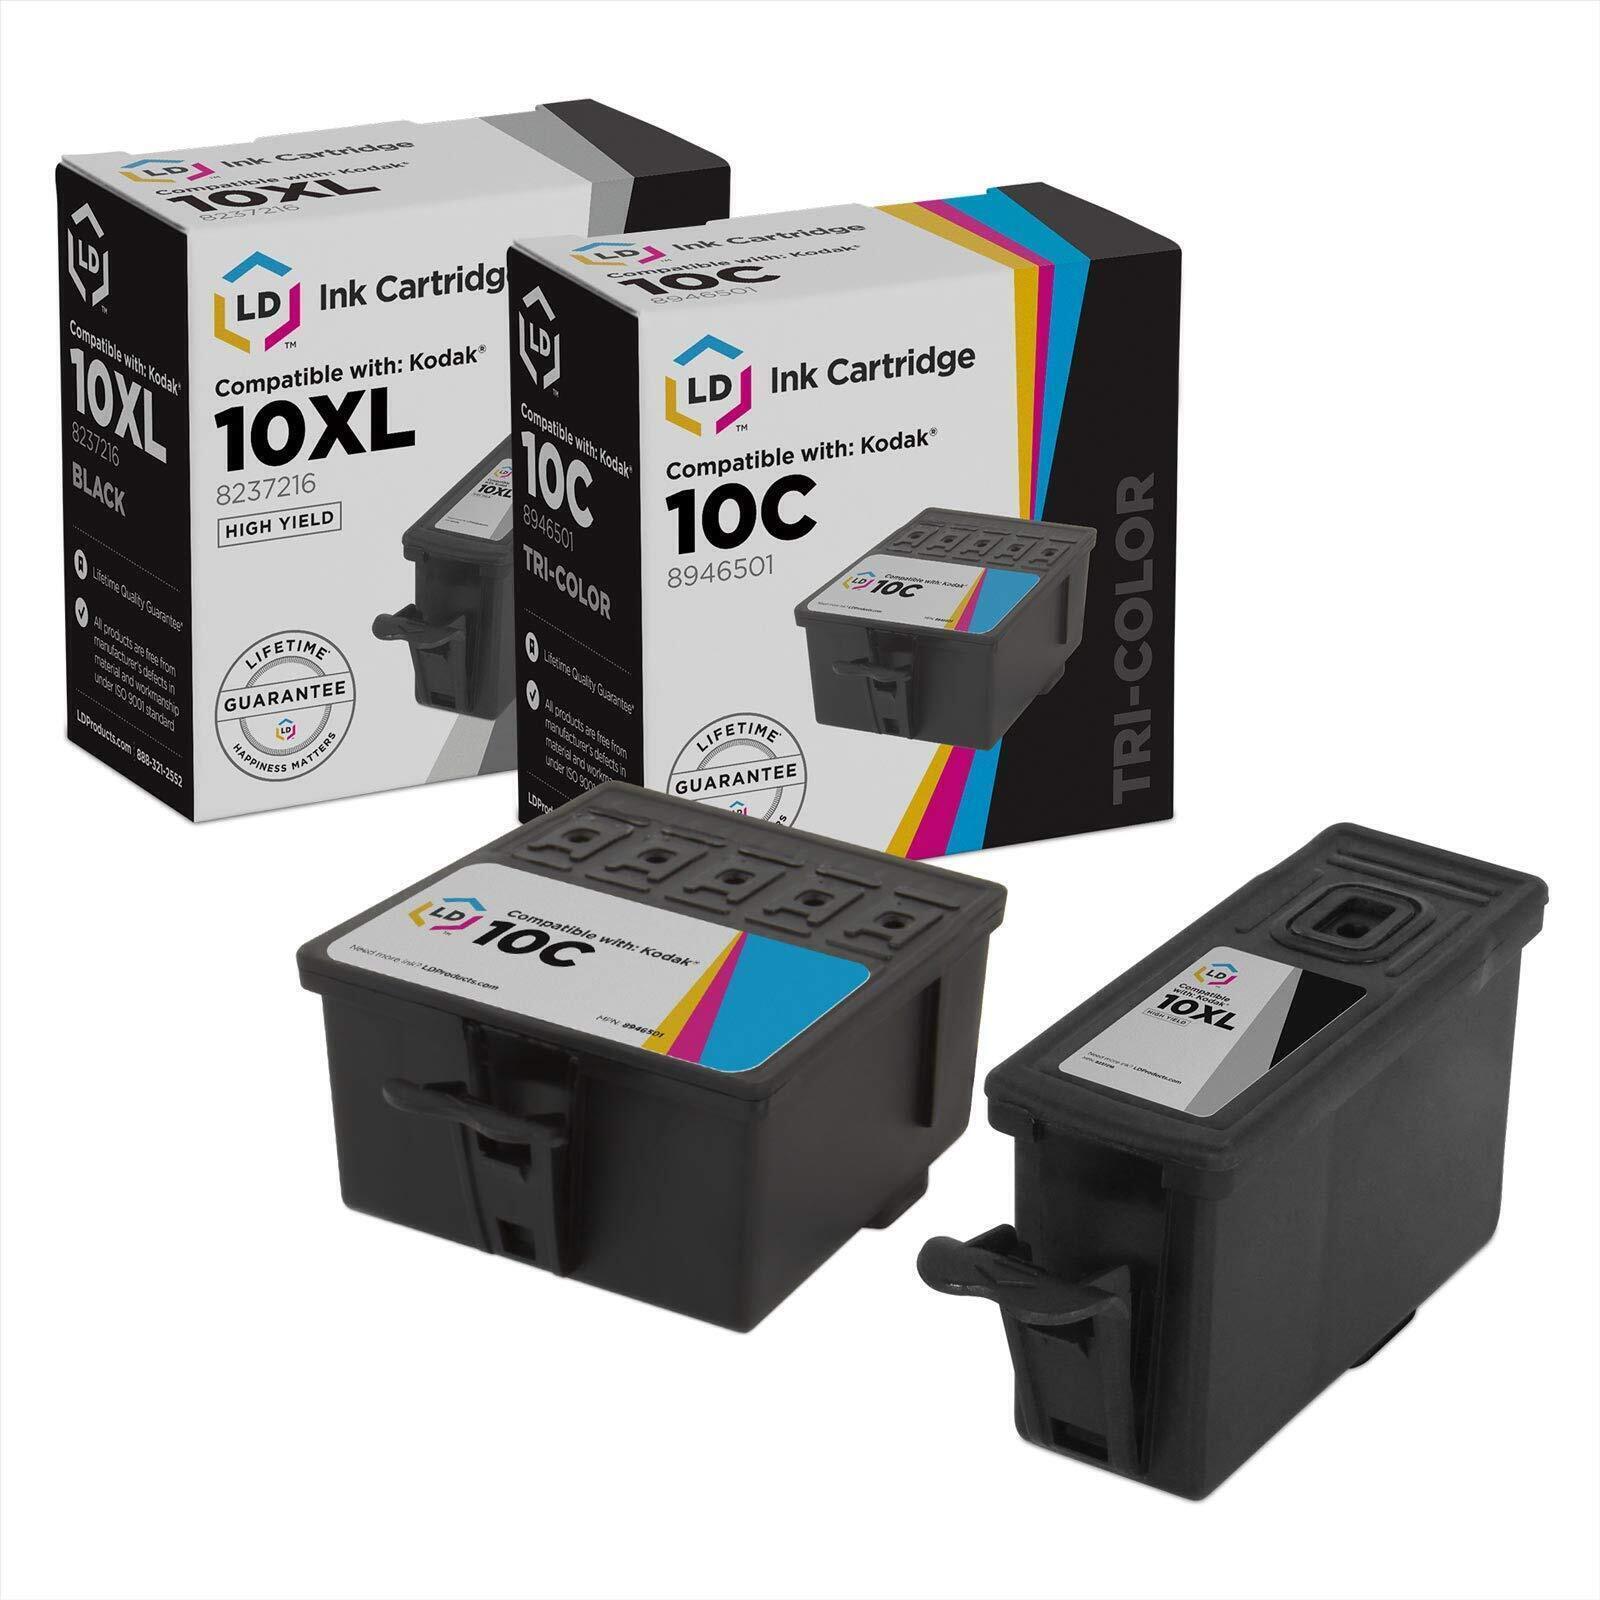 LD For Kodak #10XL 2pk Ink 8237216 HY Black 8946501 Color Cartridge